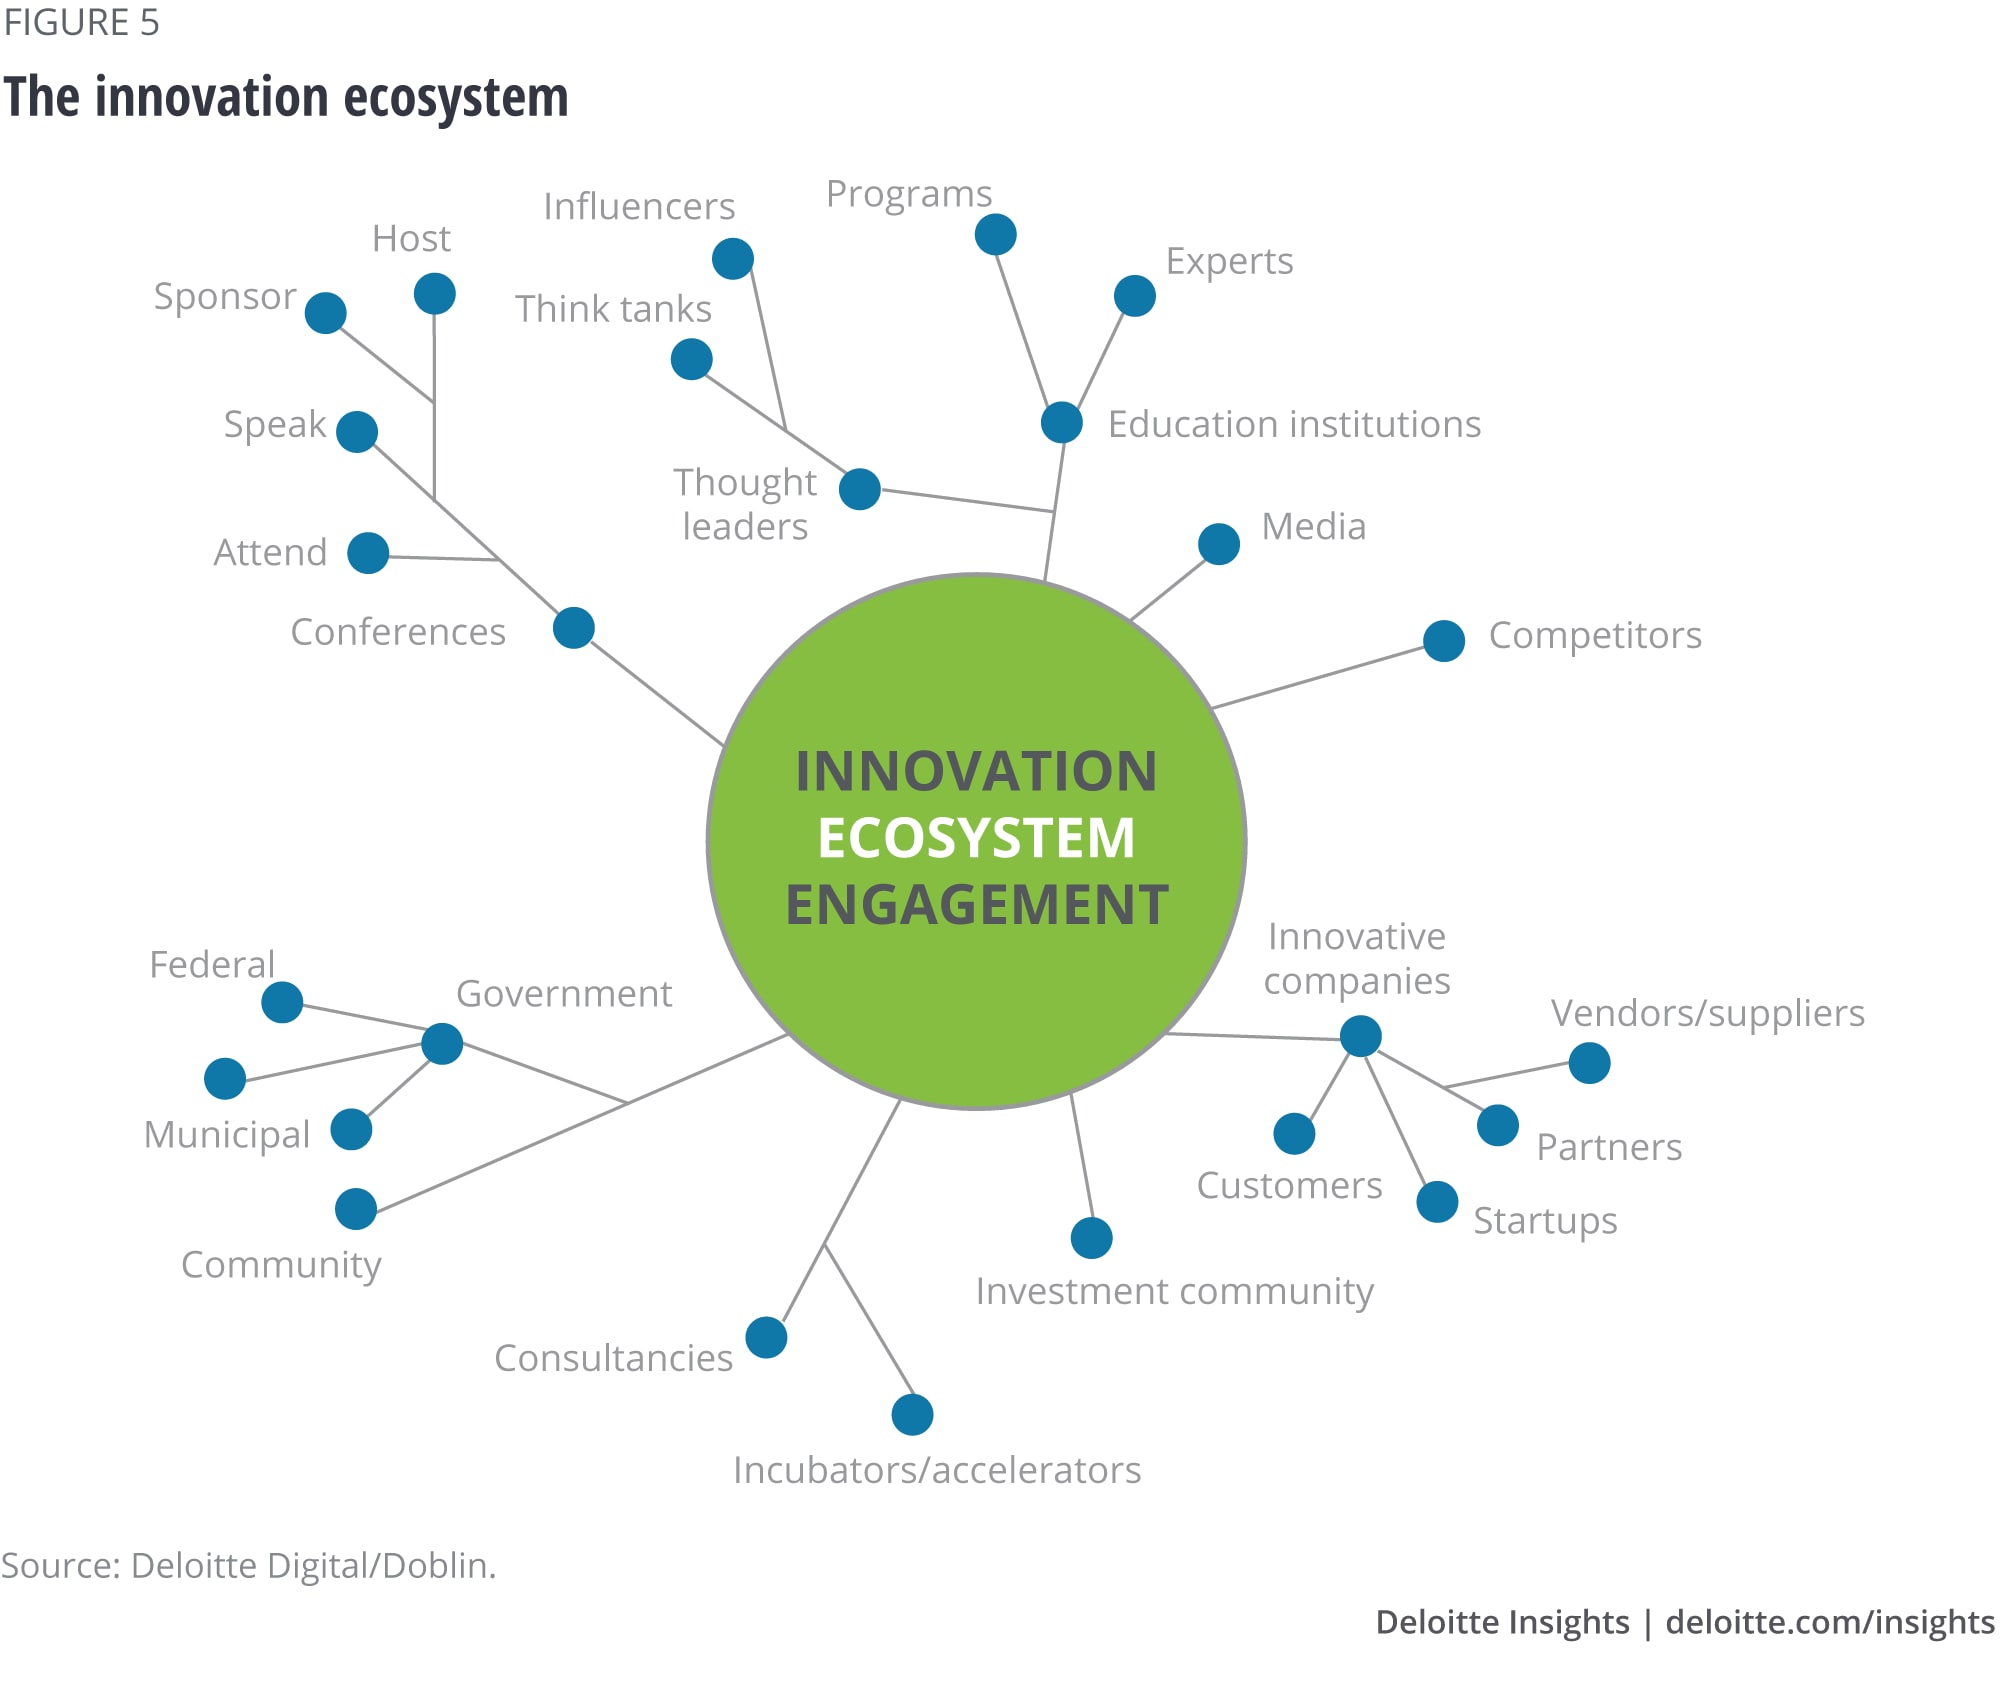 The innovation ecosystem